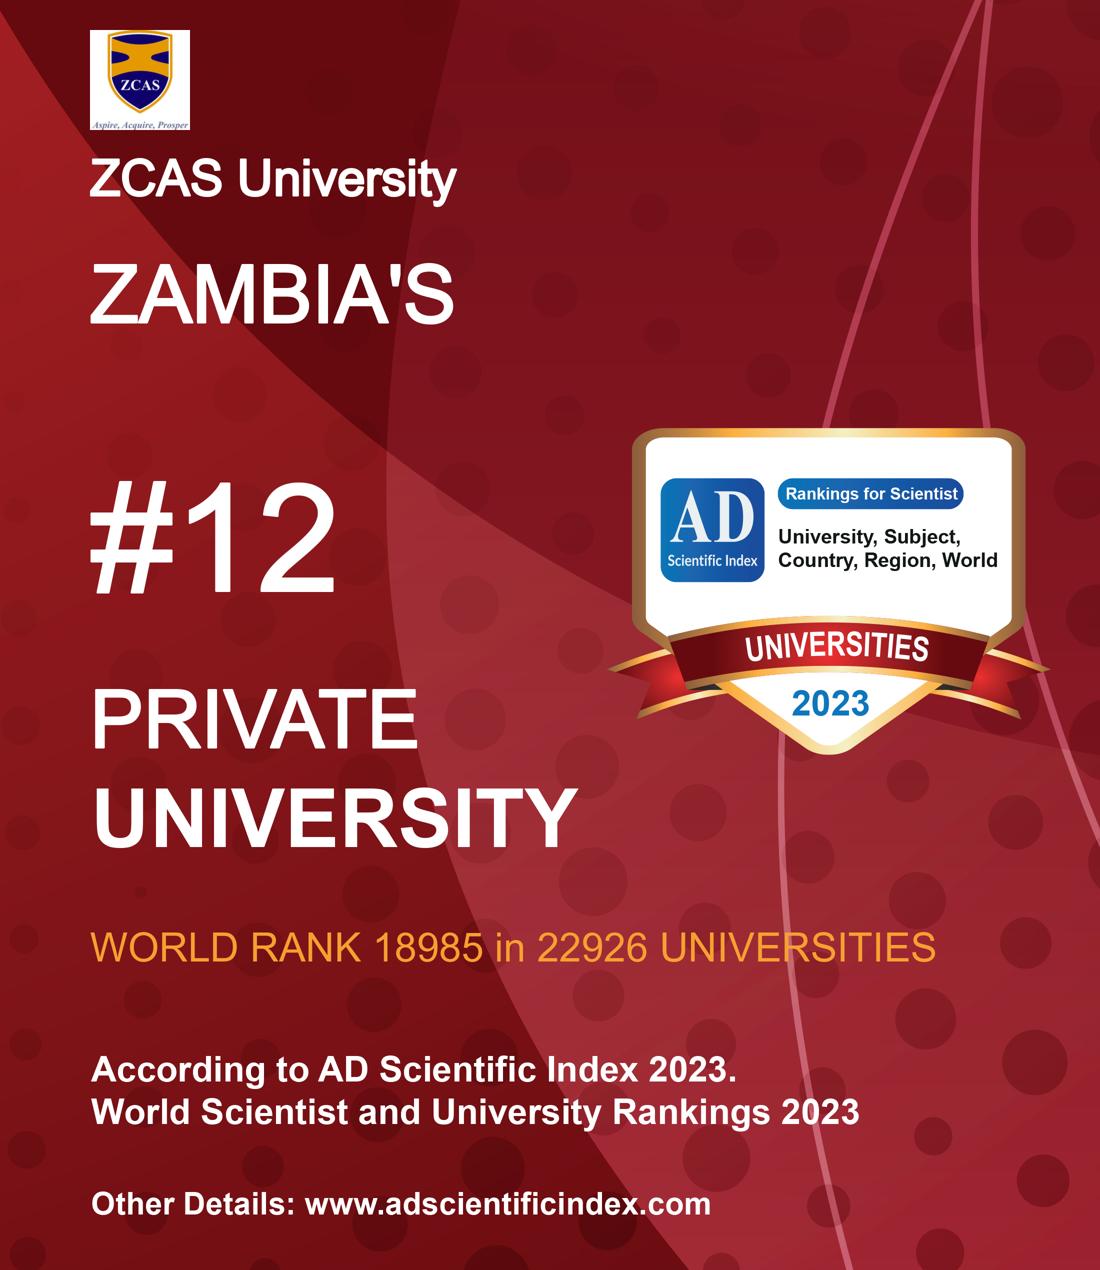 ZCAS University